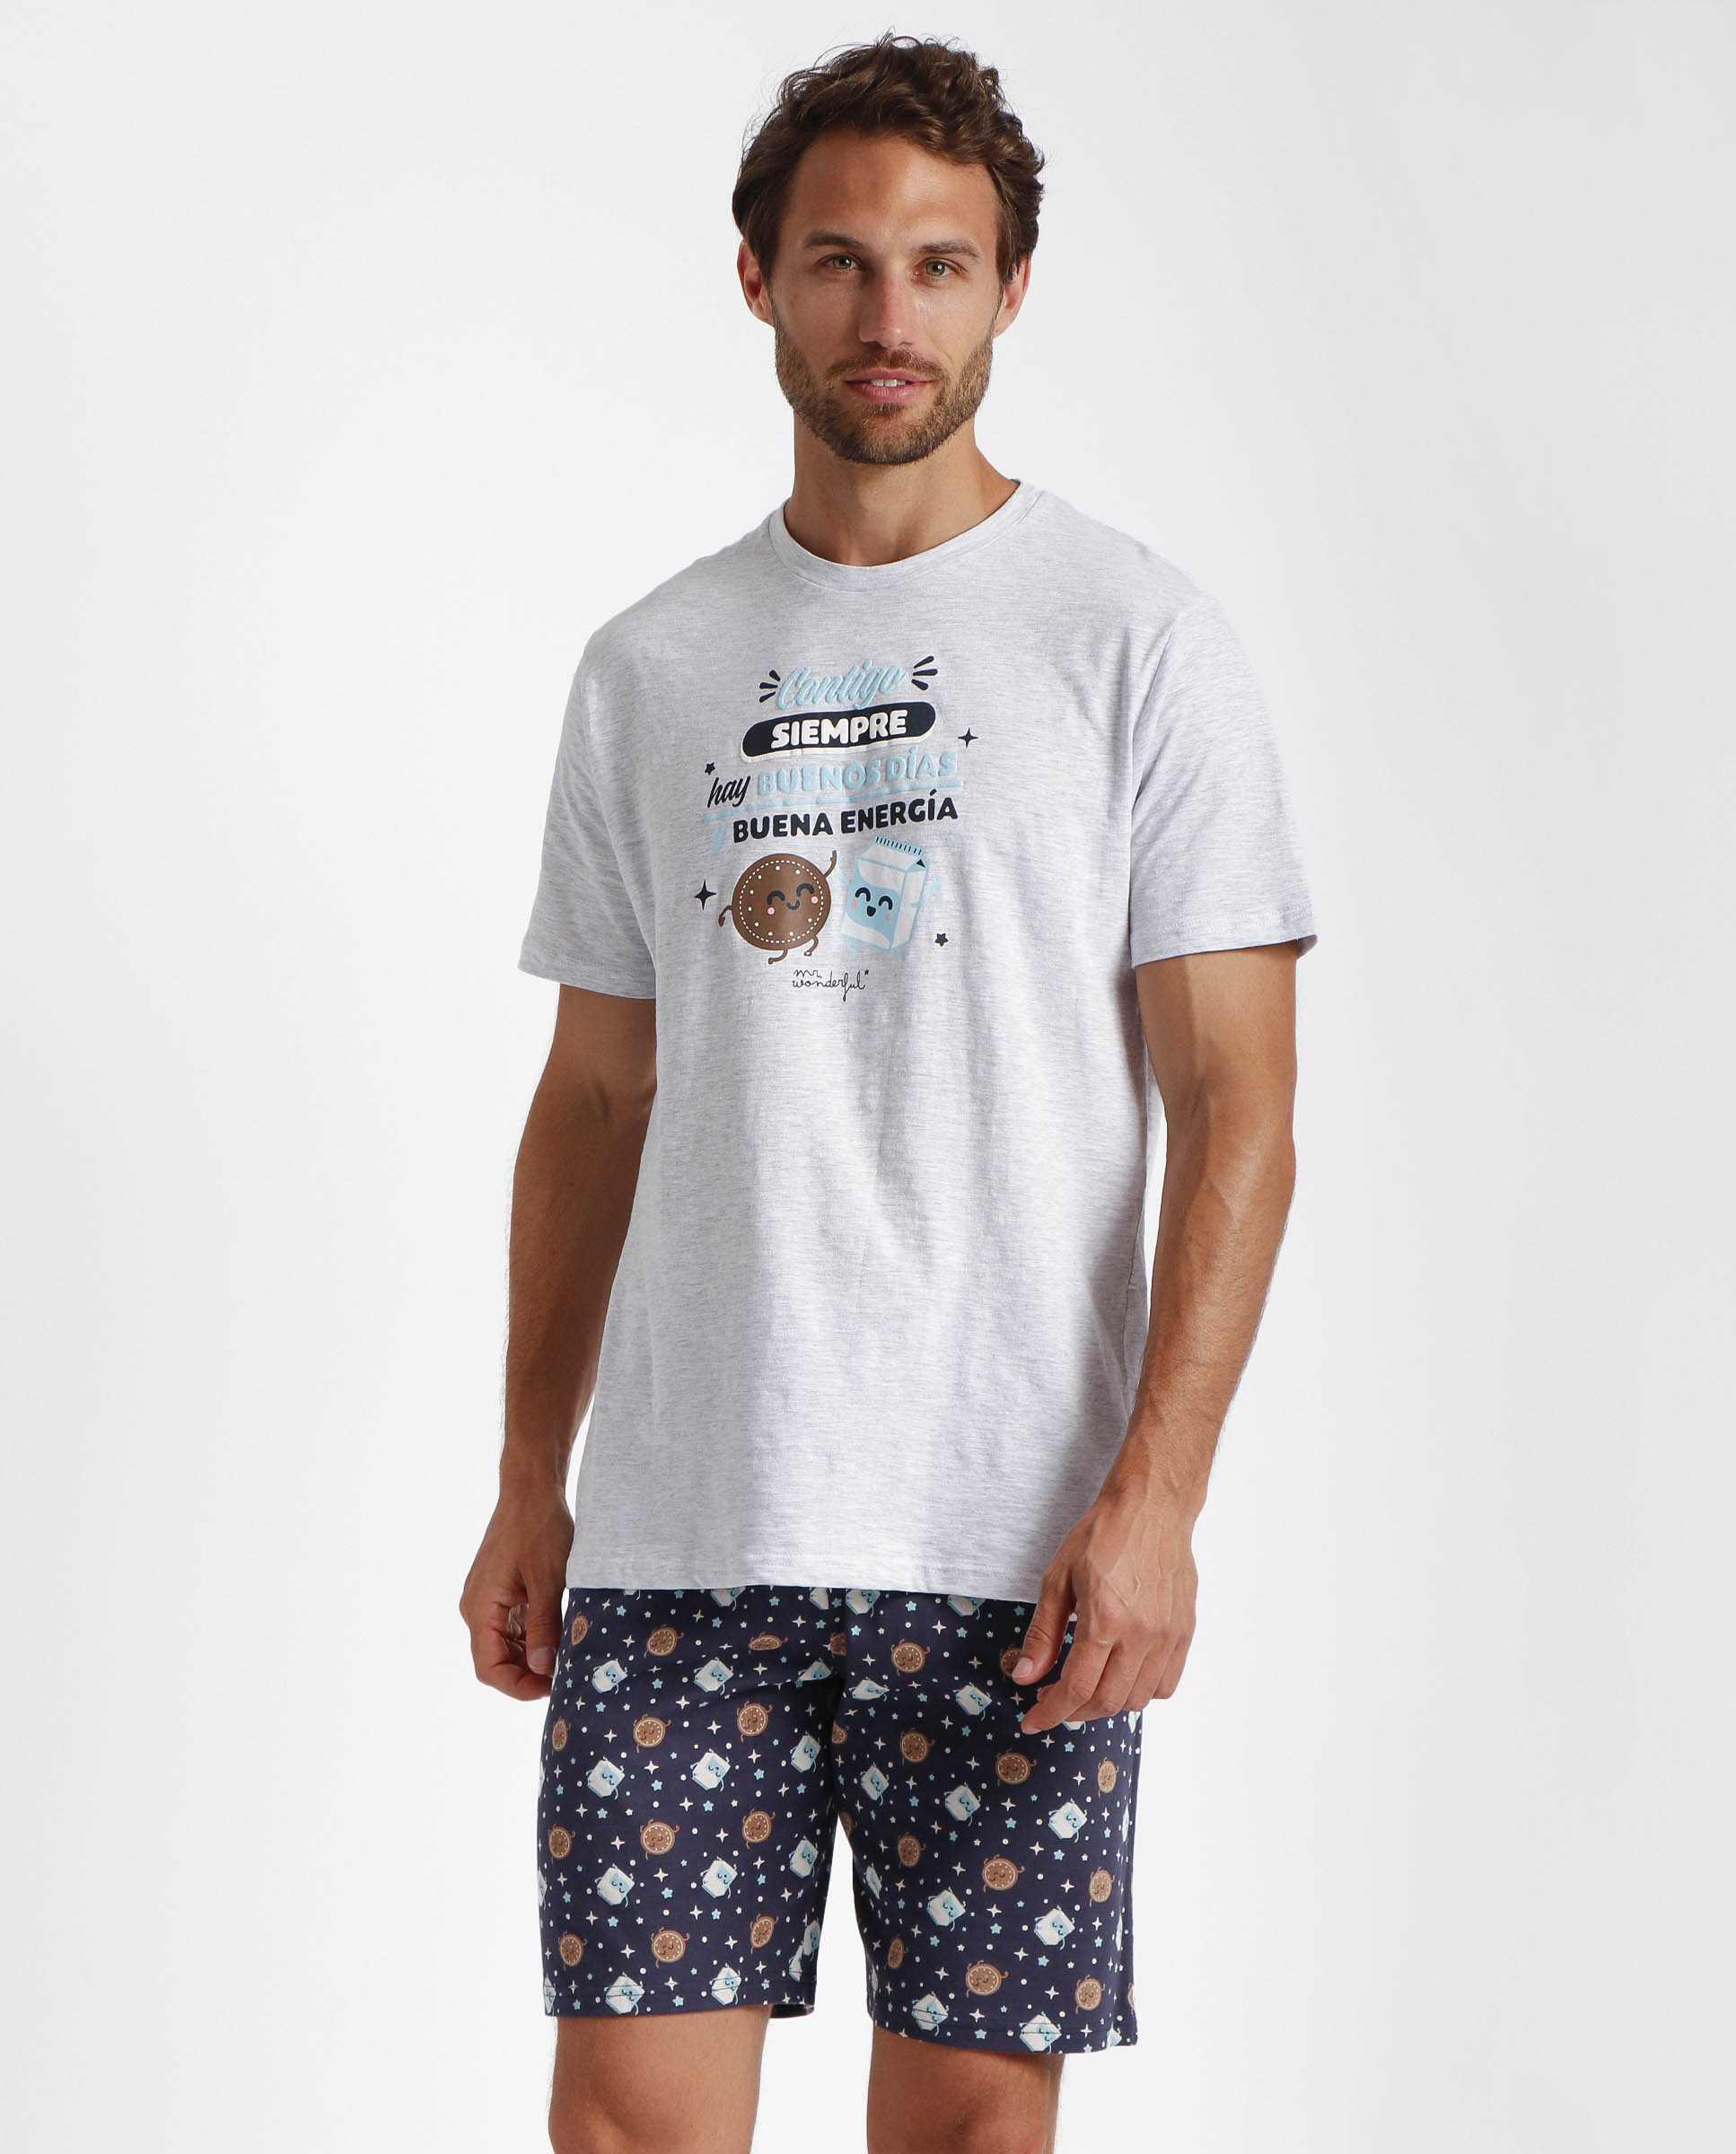   Pijama hombre 60325 